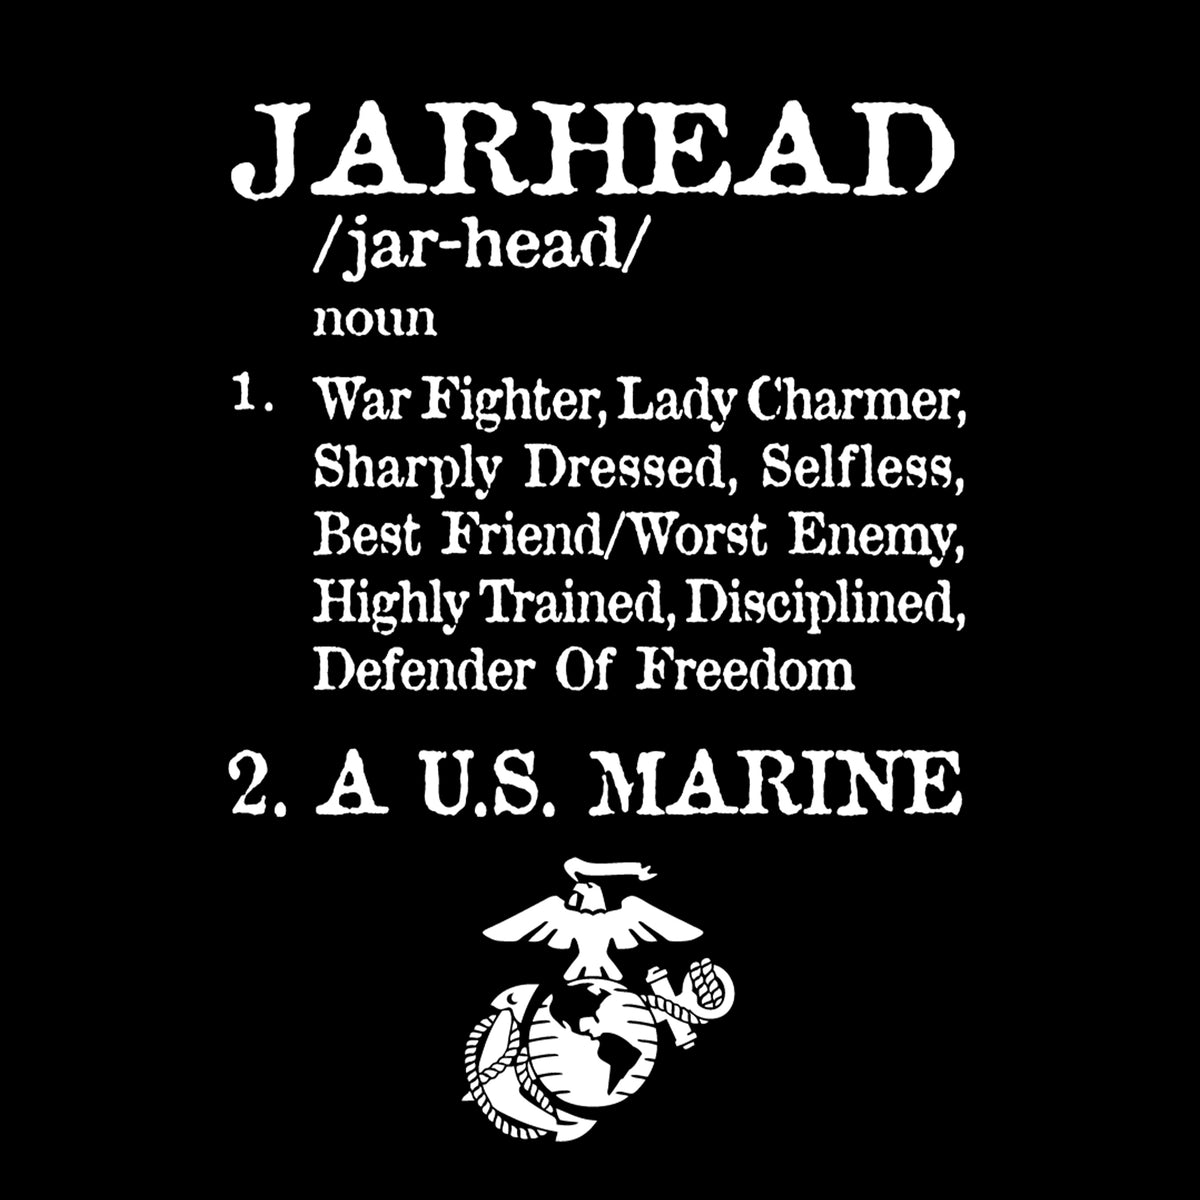 Marines Jarhead T-Shirt